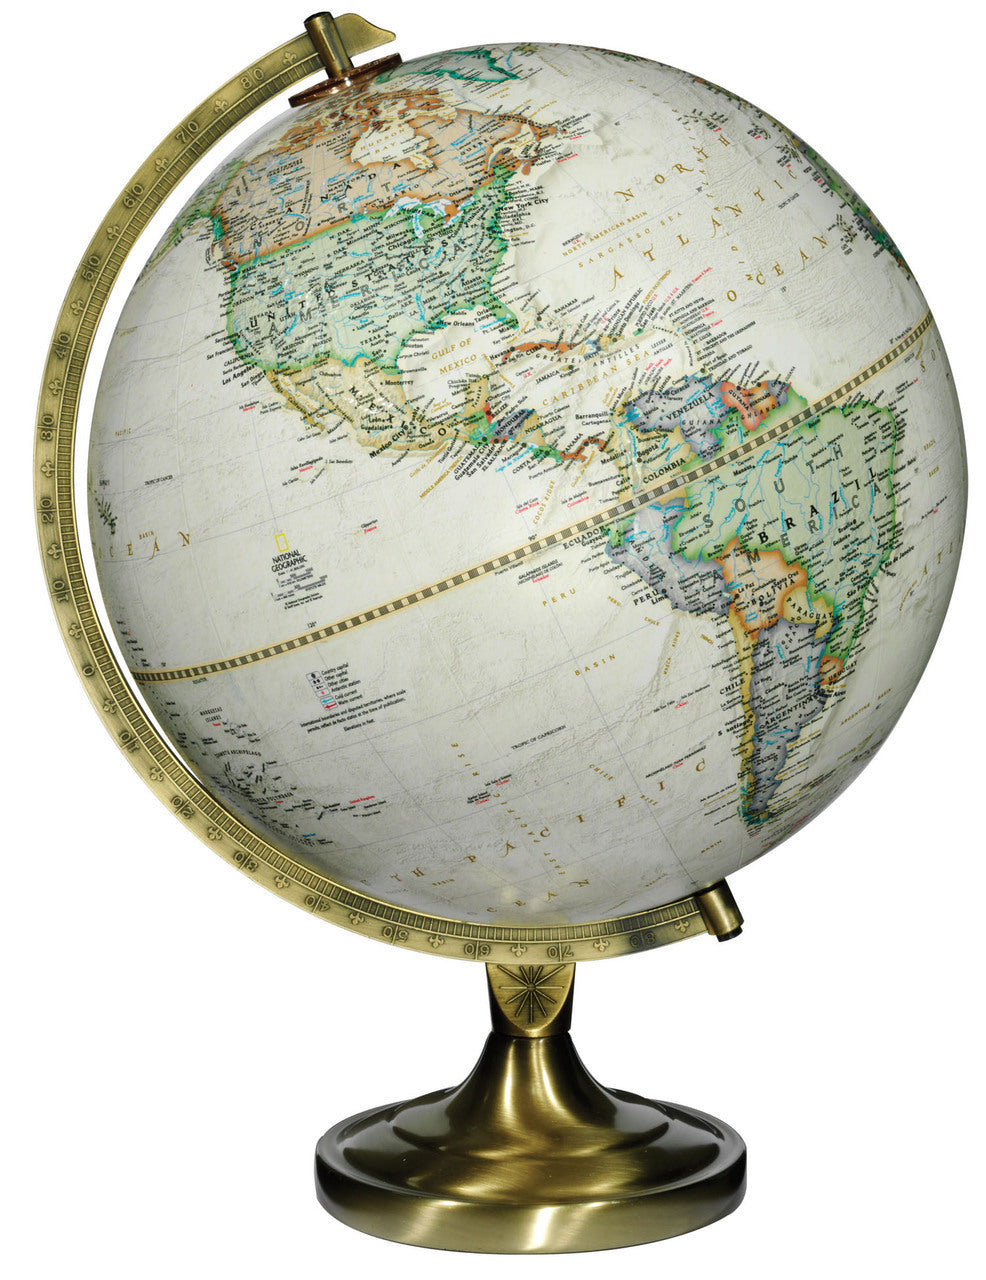 Grosvenor 12 Inch Desk World Globe By National Geographic